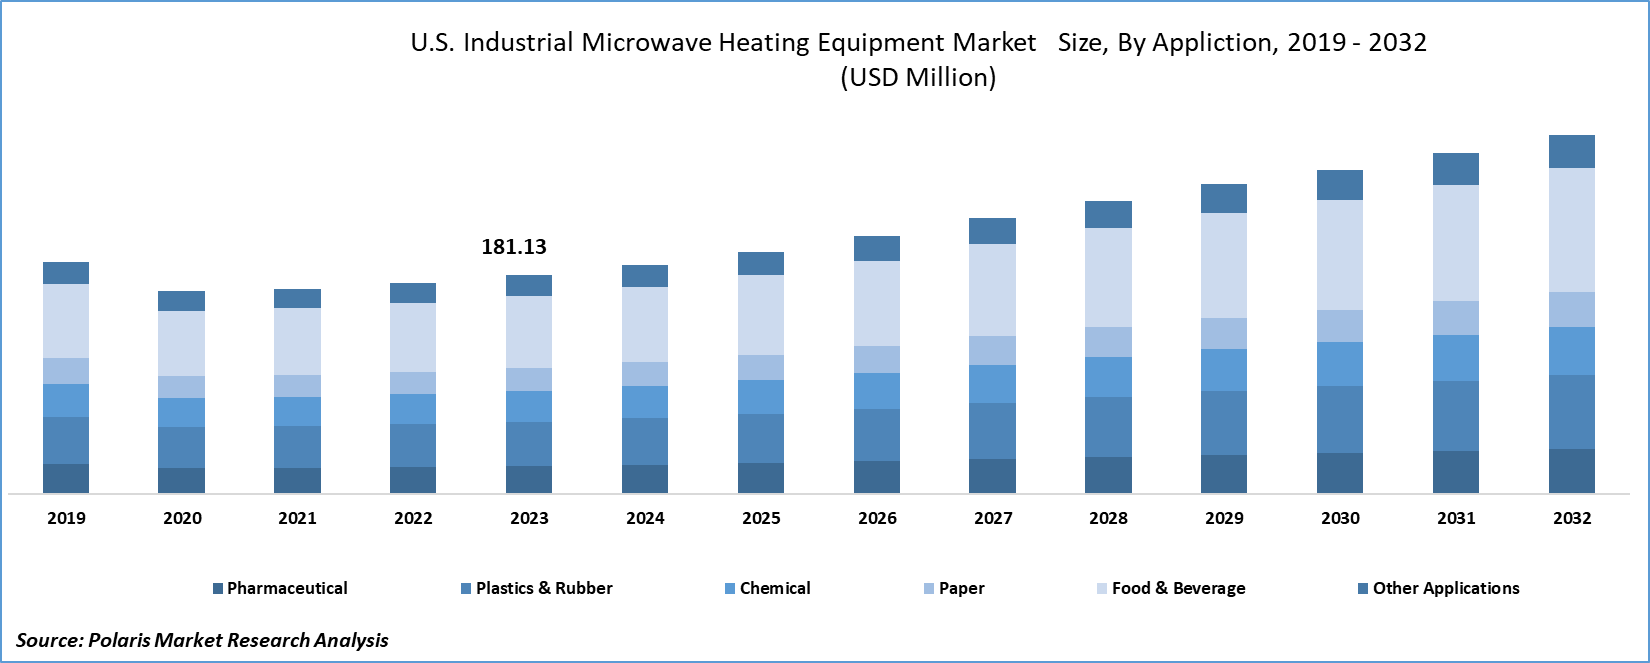 U.S. Industrial Microwave Heating Equipment Market Size